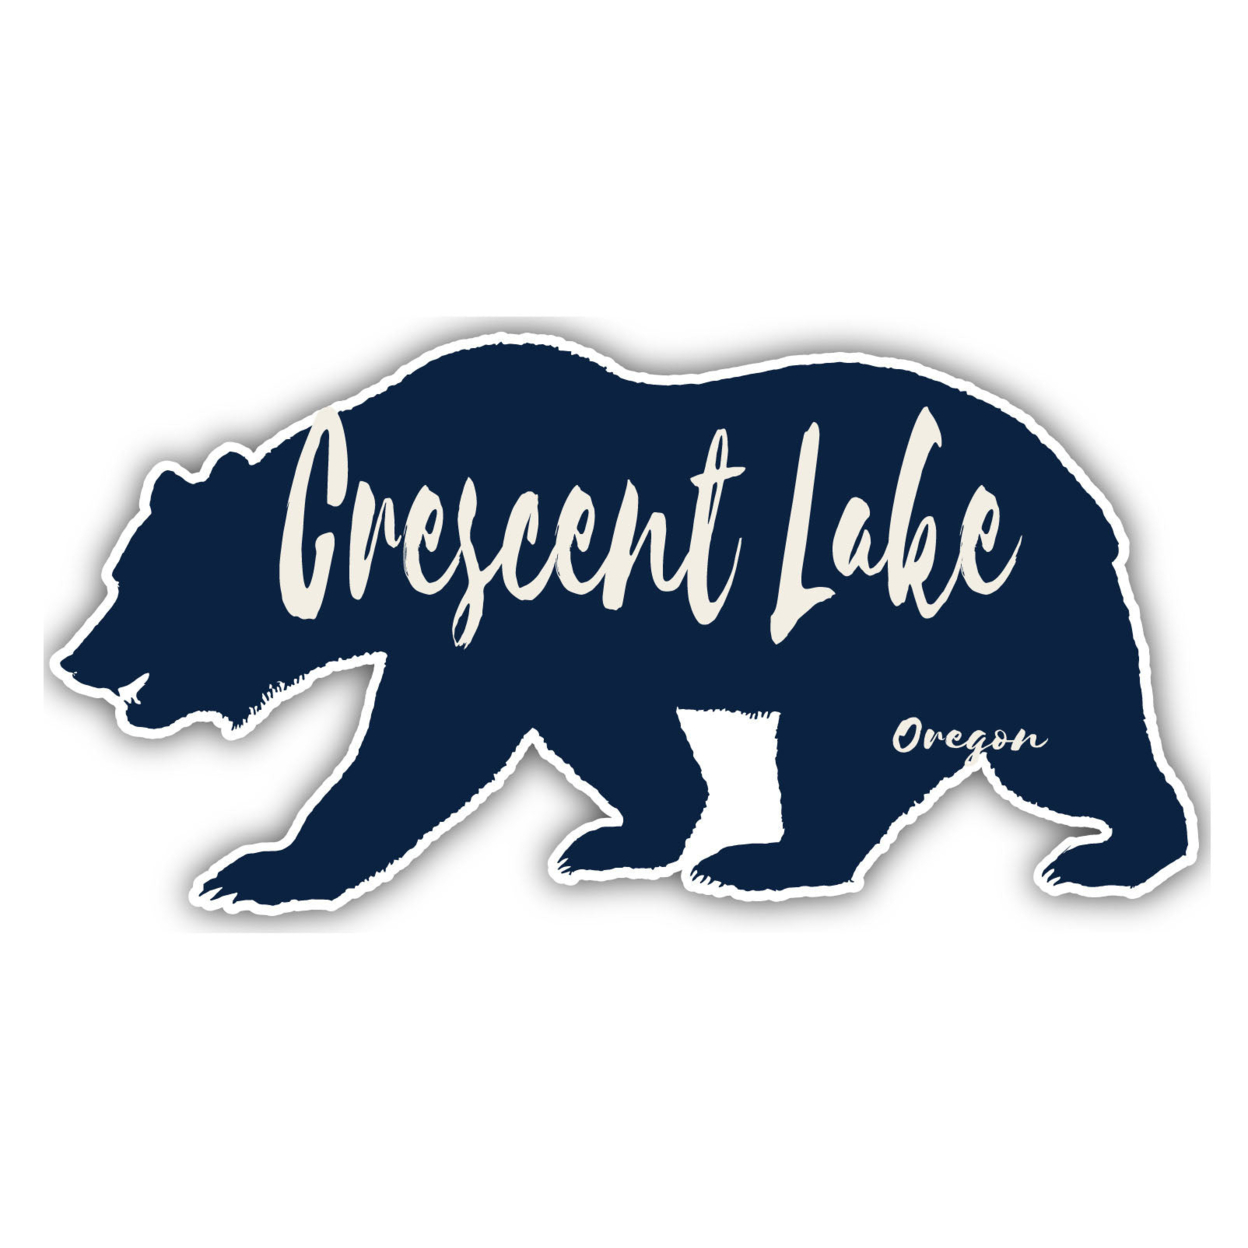 Crescent Lake Oregon Souvenir Decorative Stickers (Choose Theme And Size) - 4-Pack, 10-Inch, Bear